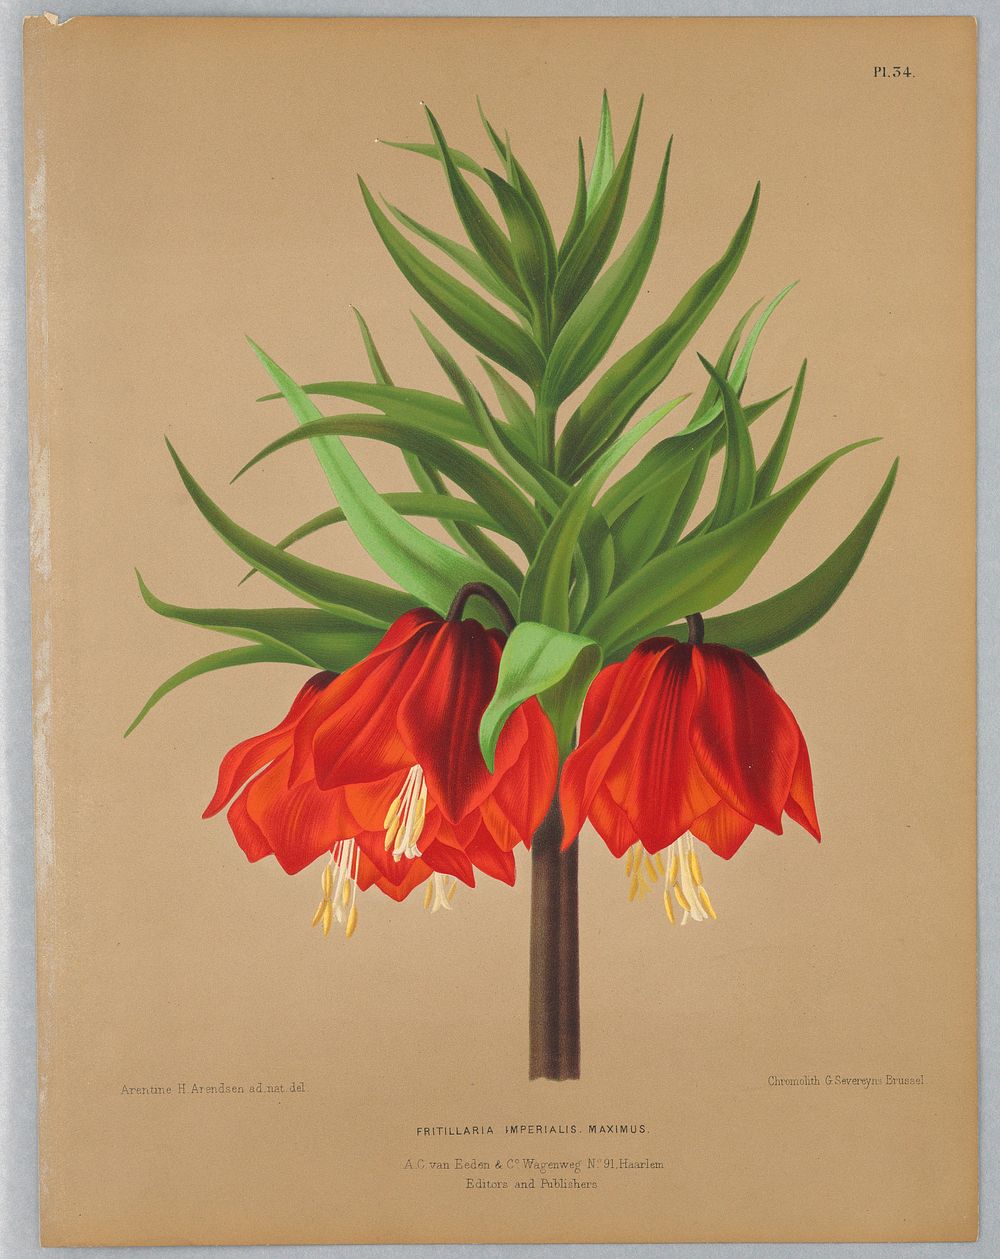 Fritillaria Imperalis Maximus, Plate 34 from A. C. Van Eeden's "Flora of Haarlem"